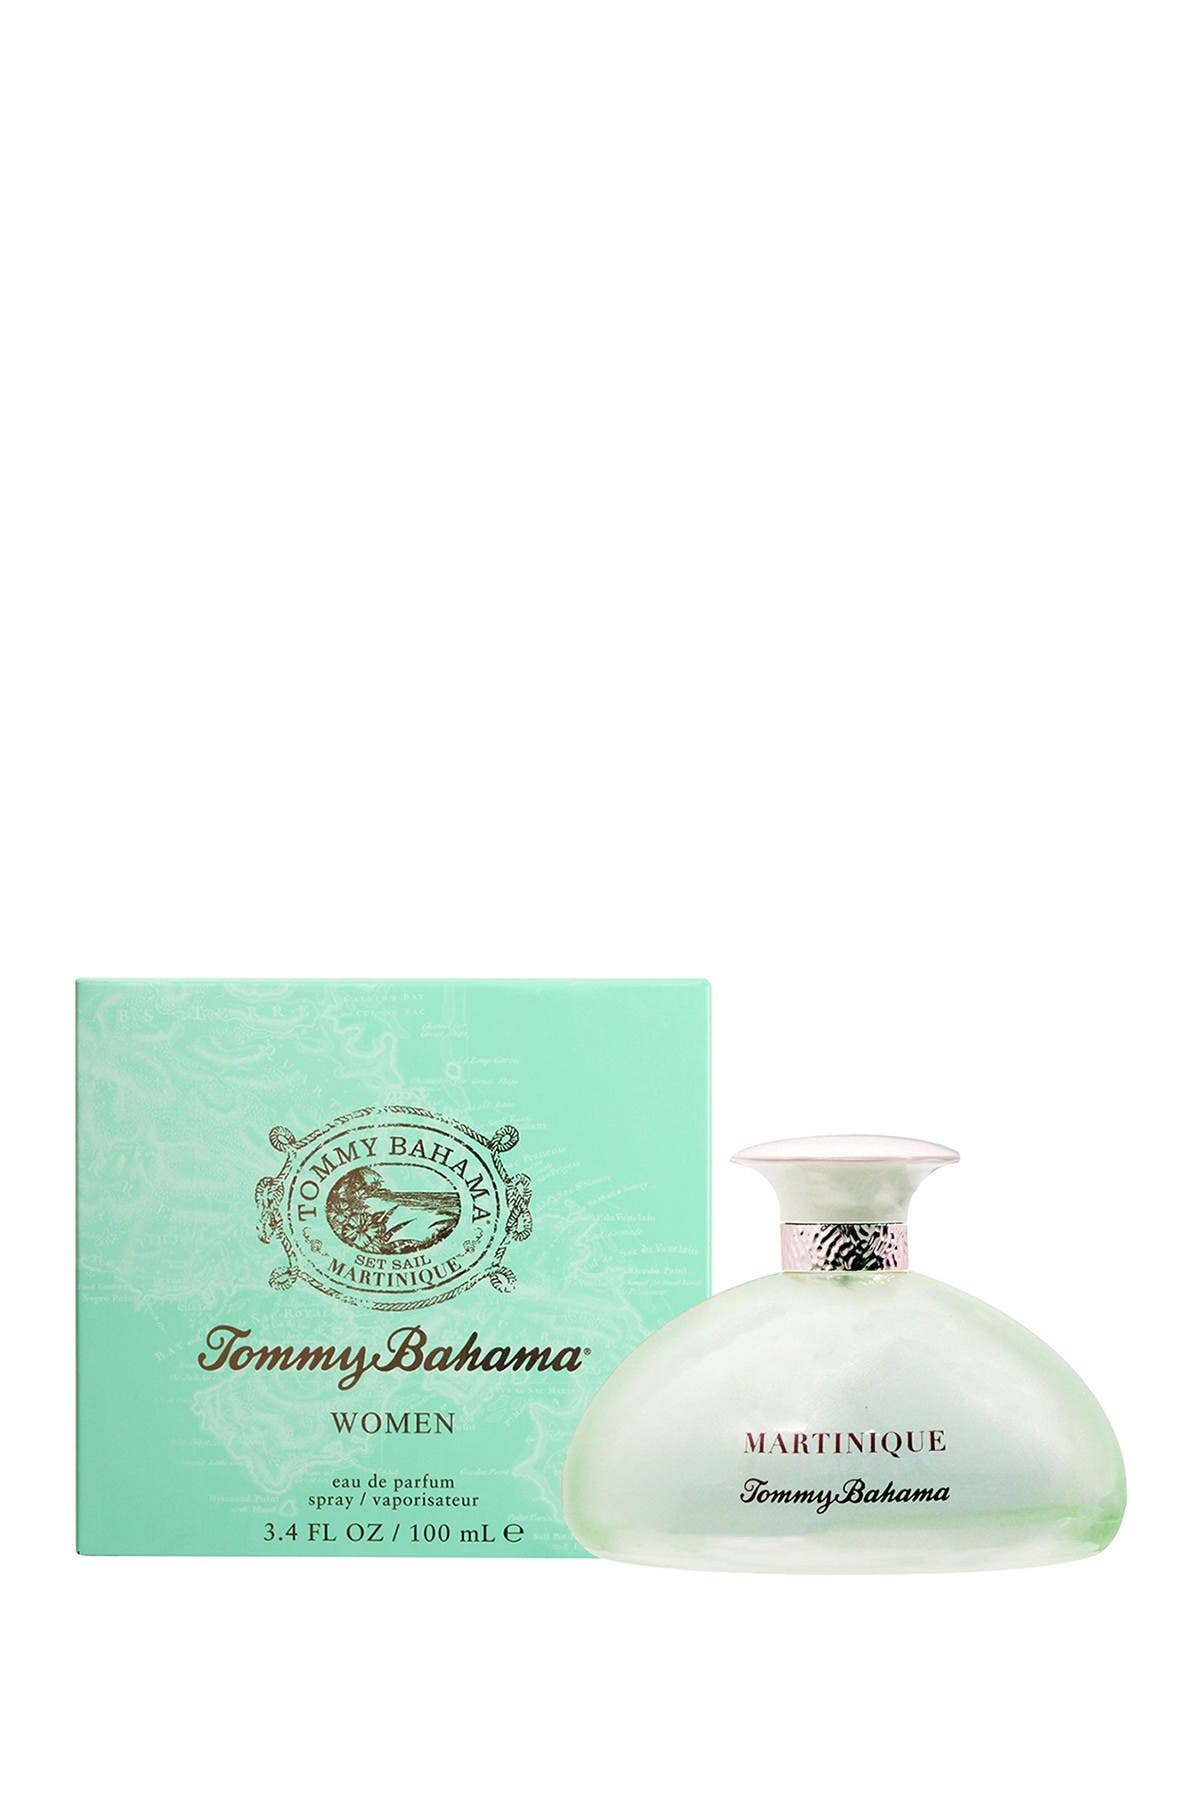 martinique tommy bahama perfume